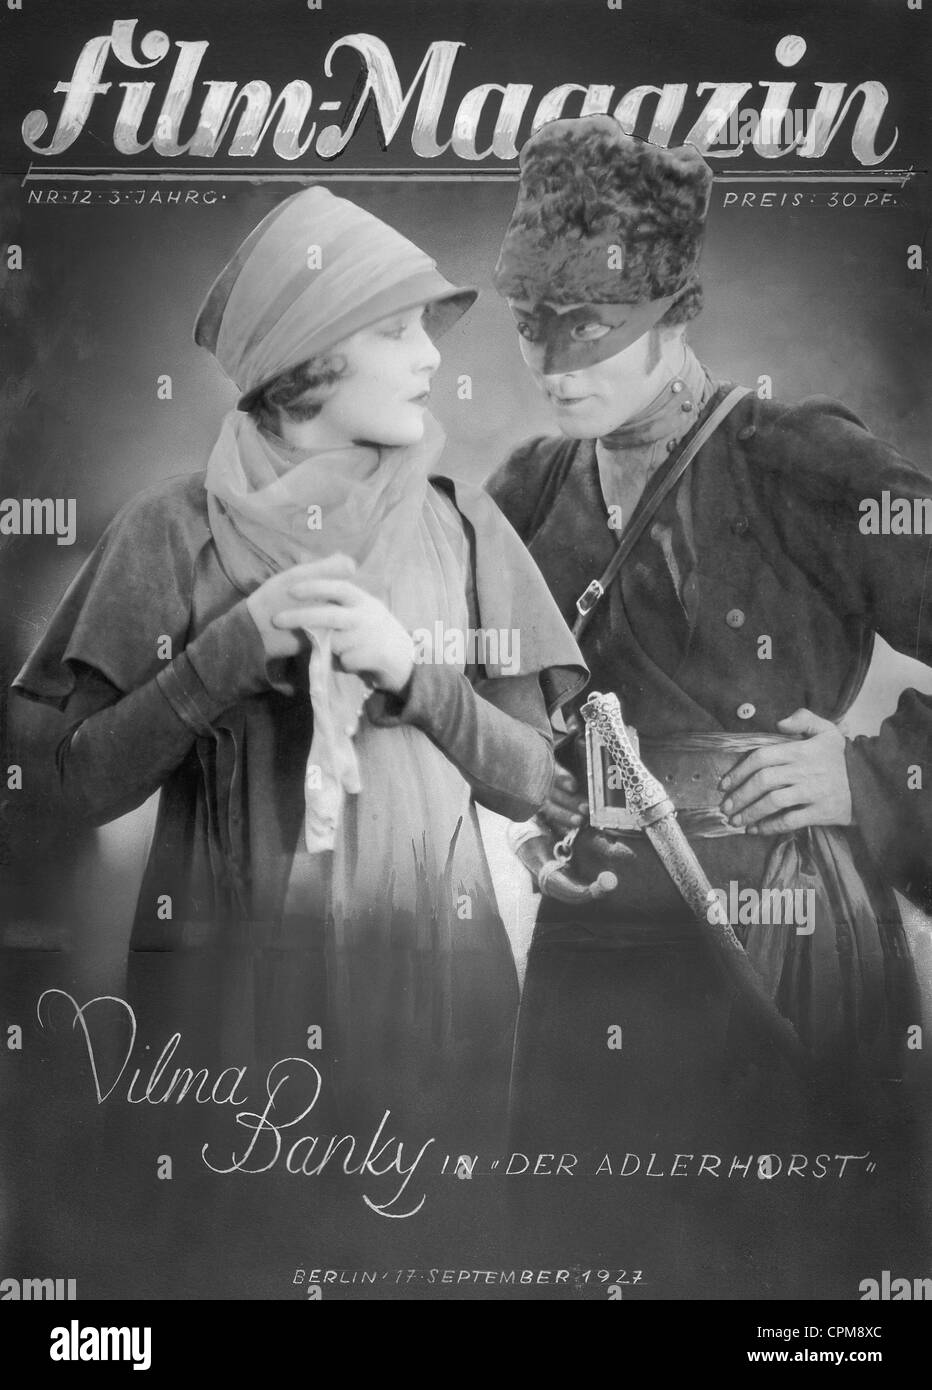 Rudolph Valentino und Vilma Banky im "Adlerhorst", 1925 Stockfoto